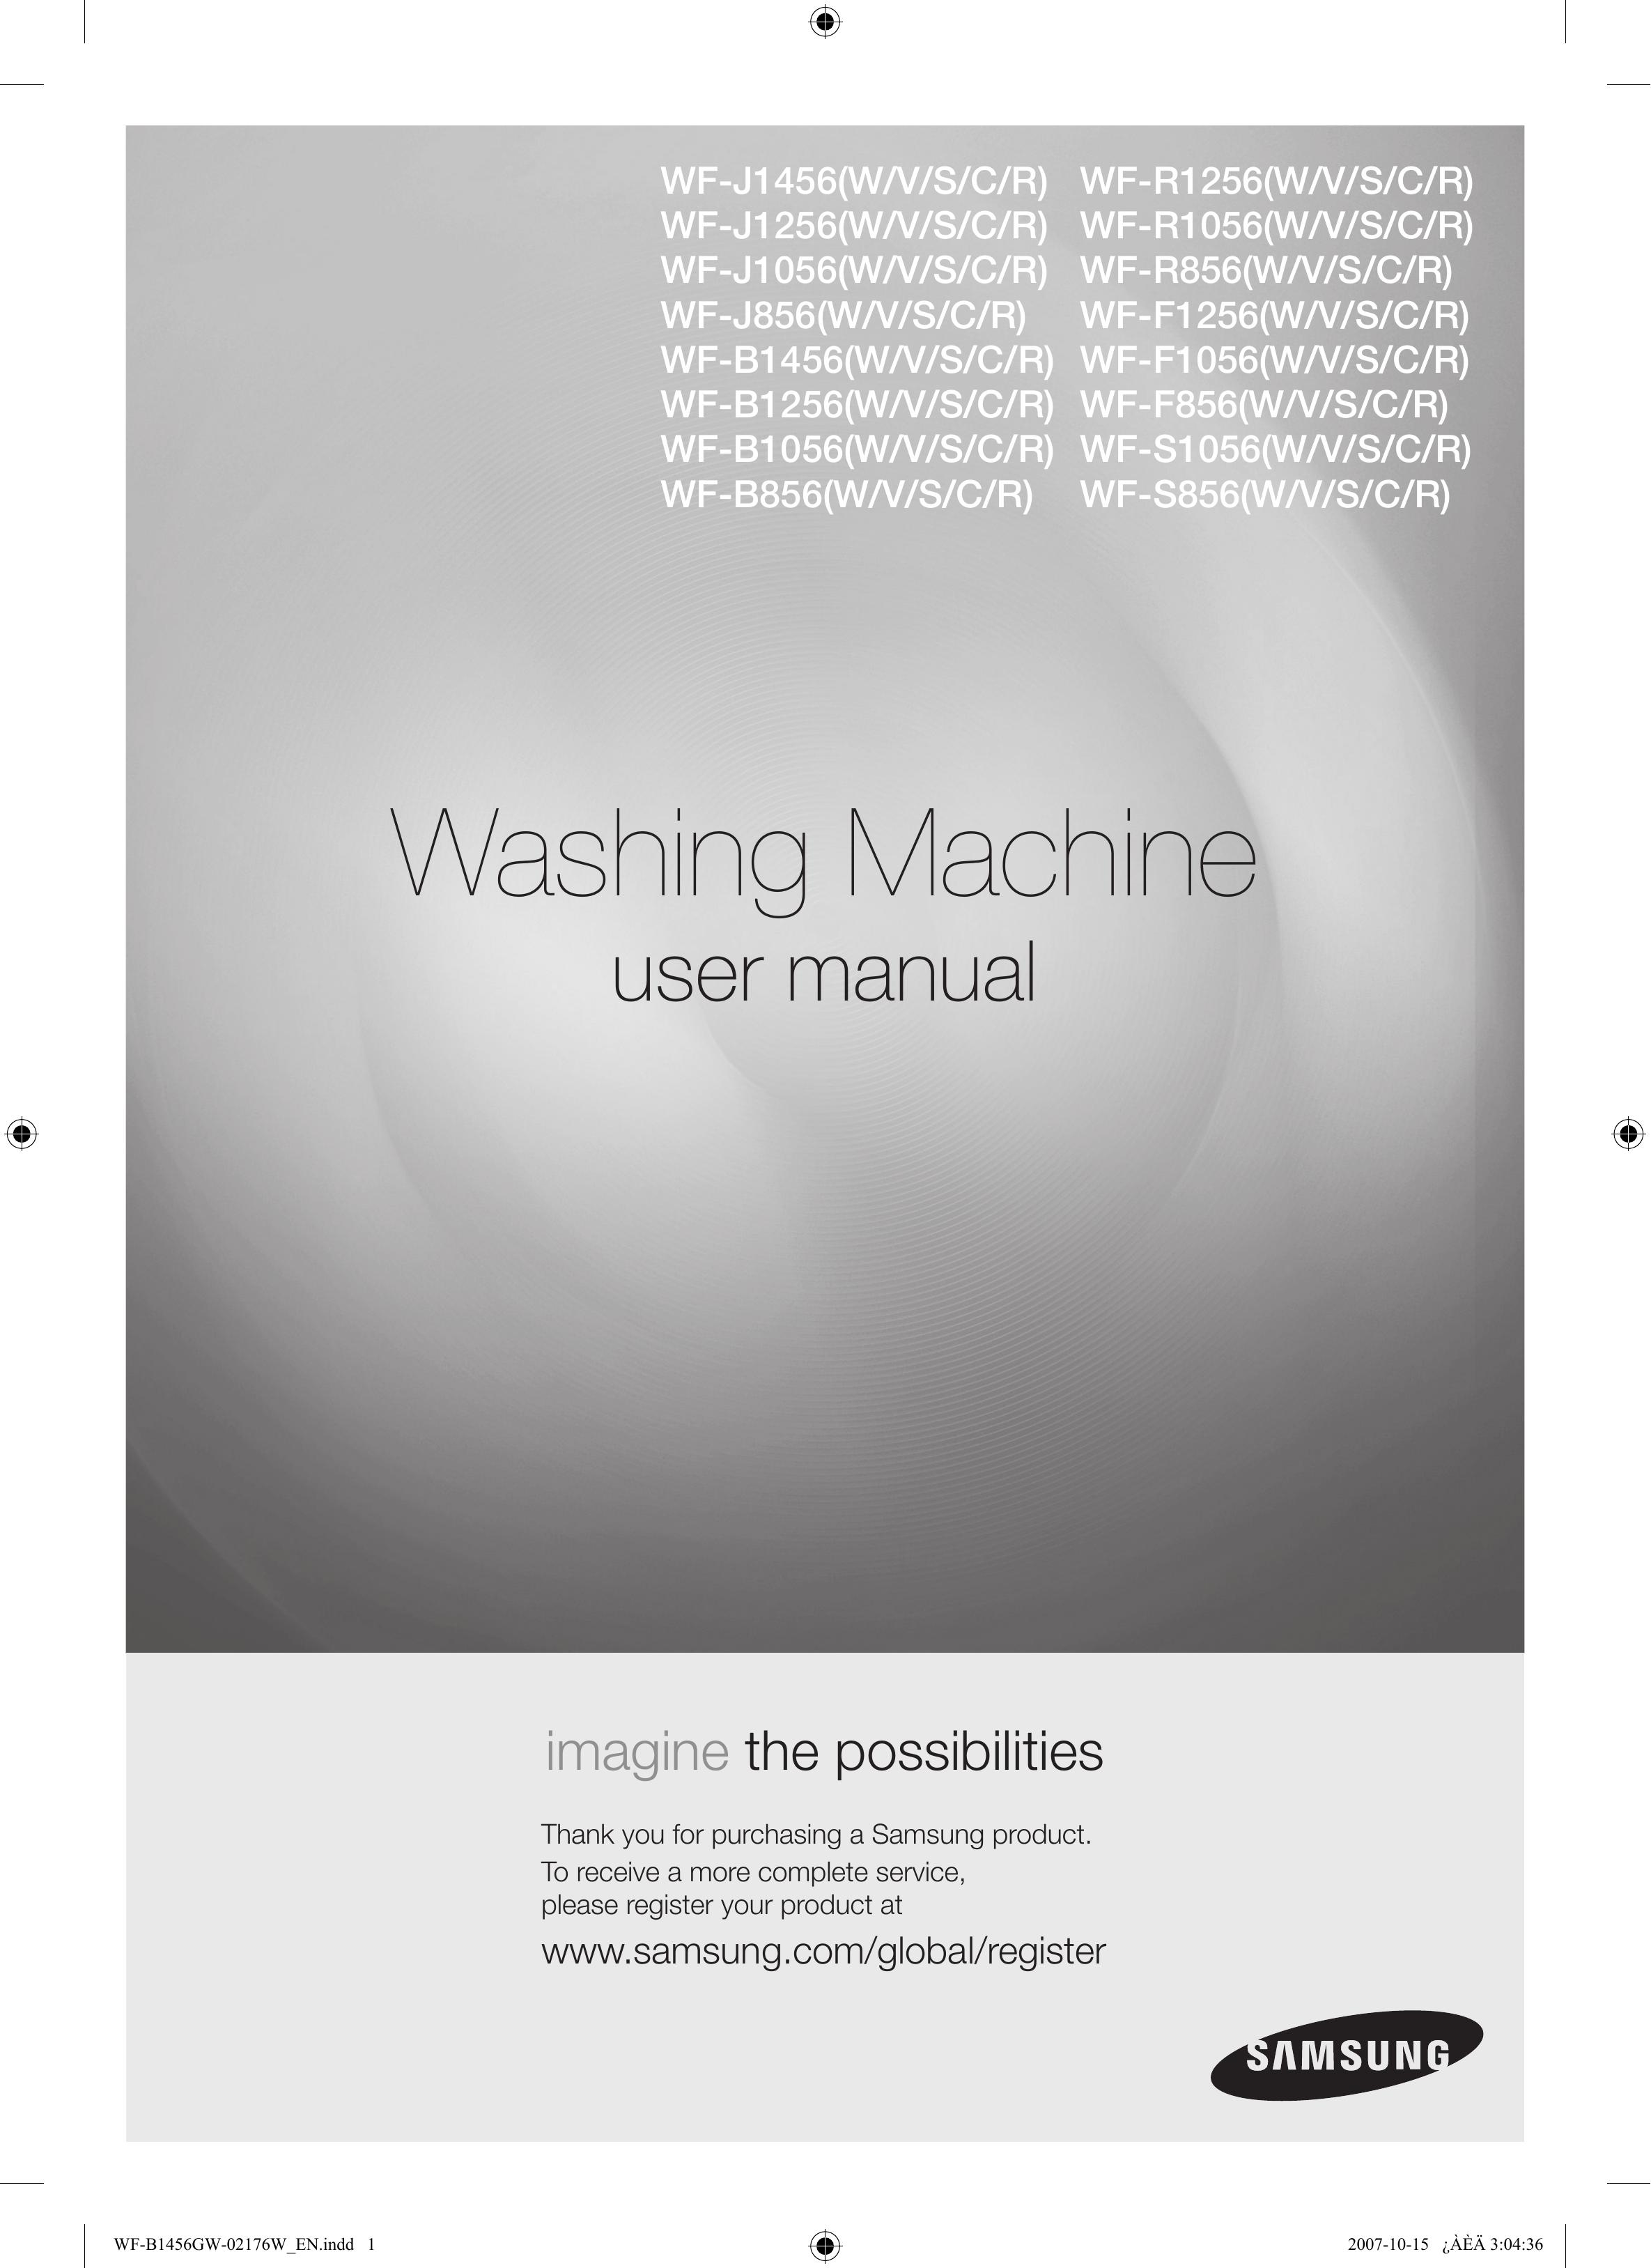 Samsung WF-F10 Washer/Dryer User Manual